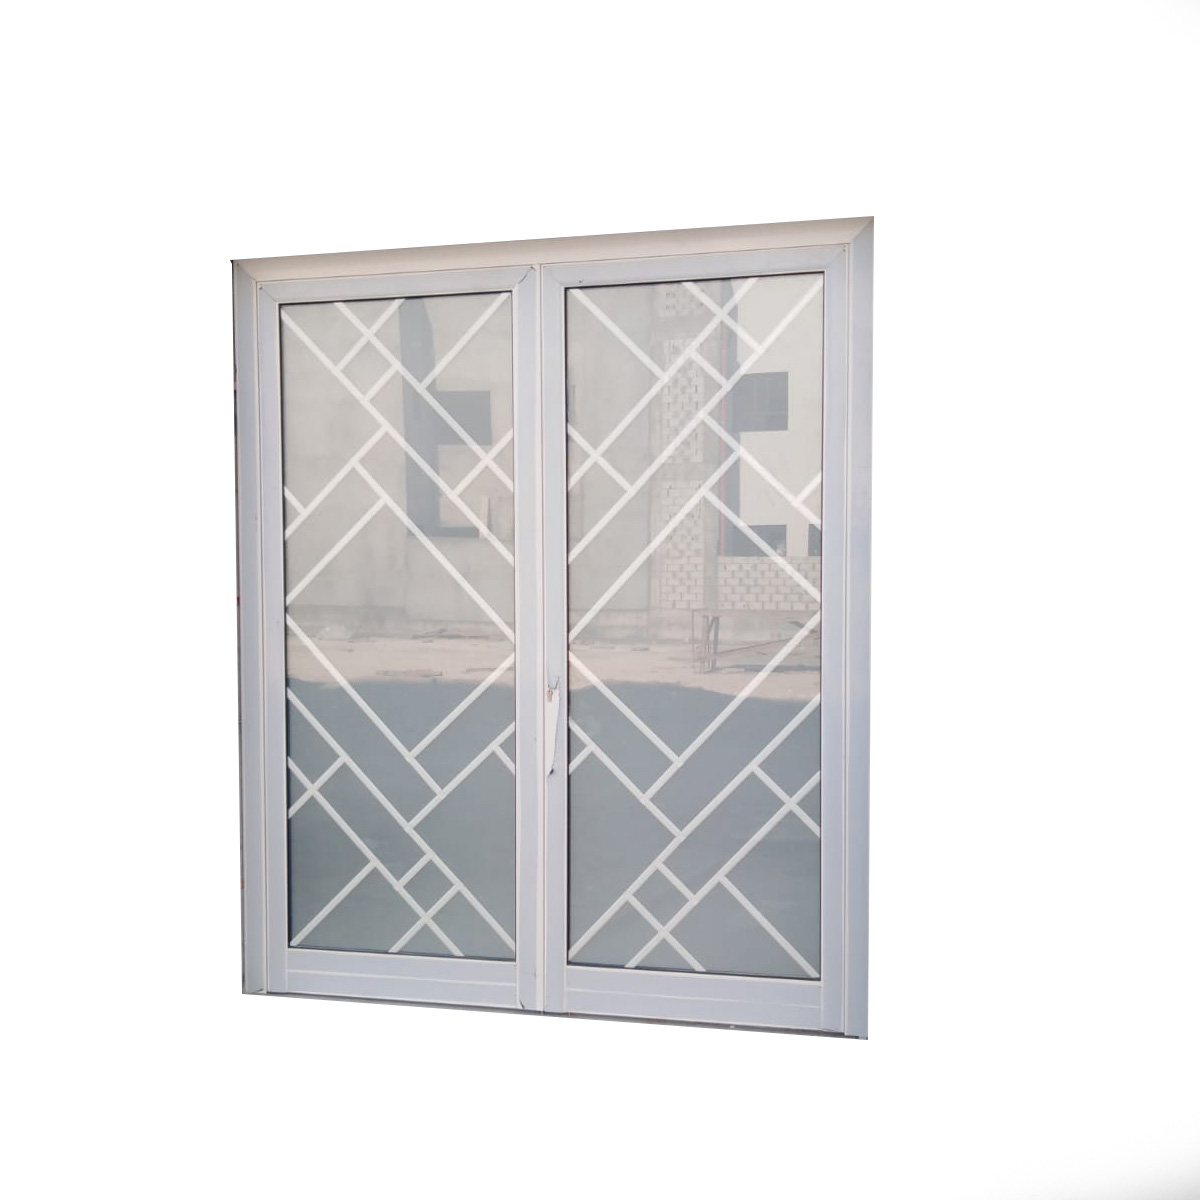 Buy White Glass Design Door Online | Manufacturing Production Services | Qetaat.com